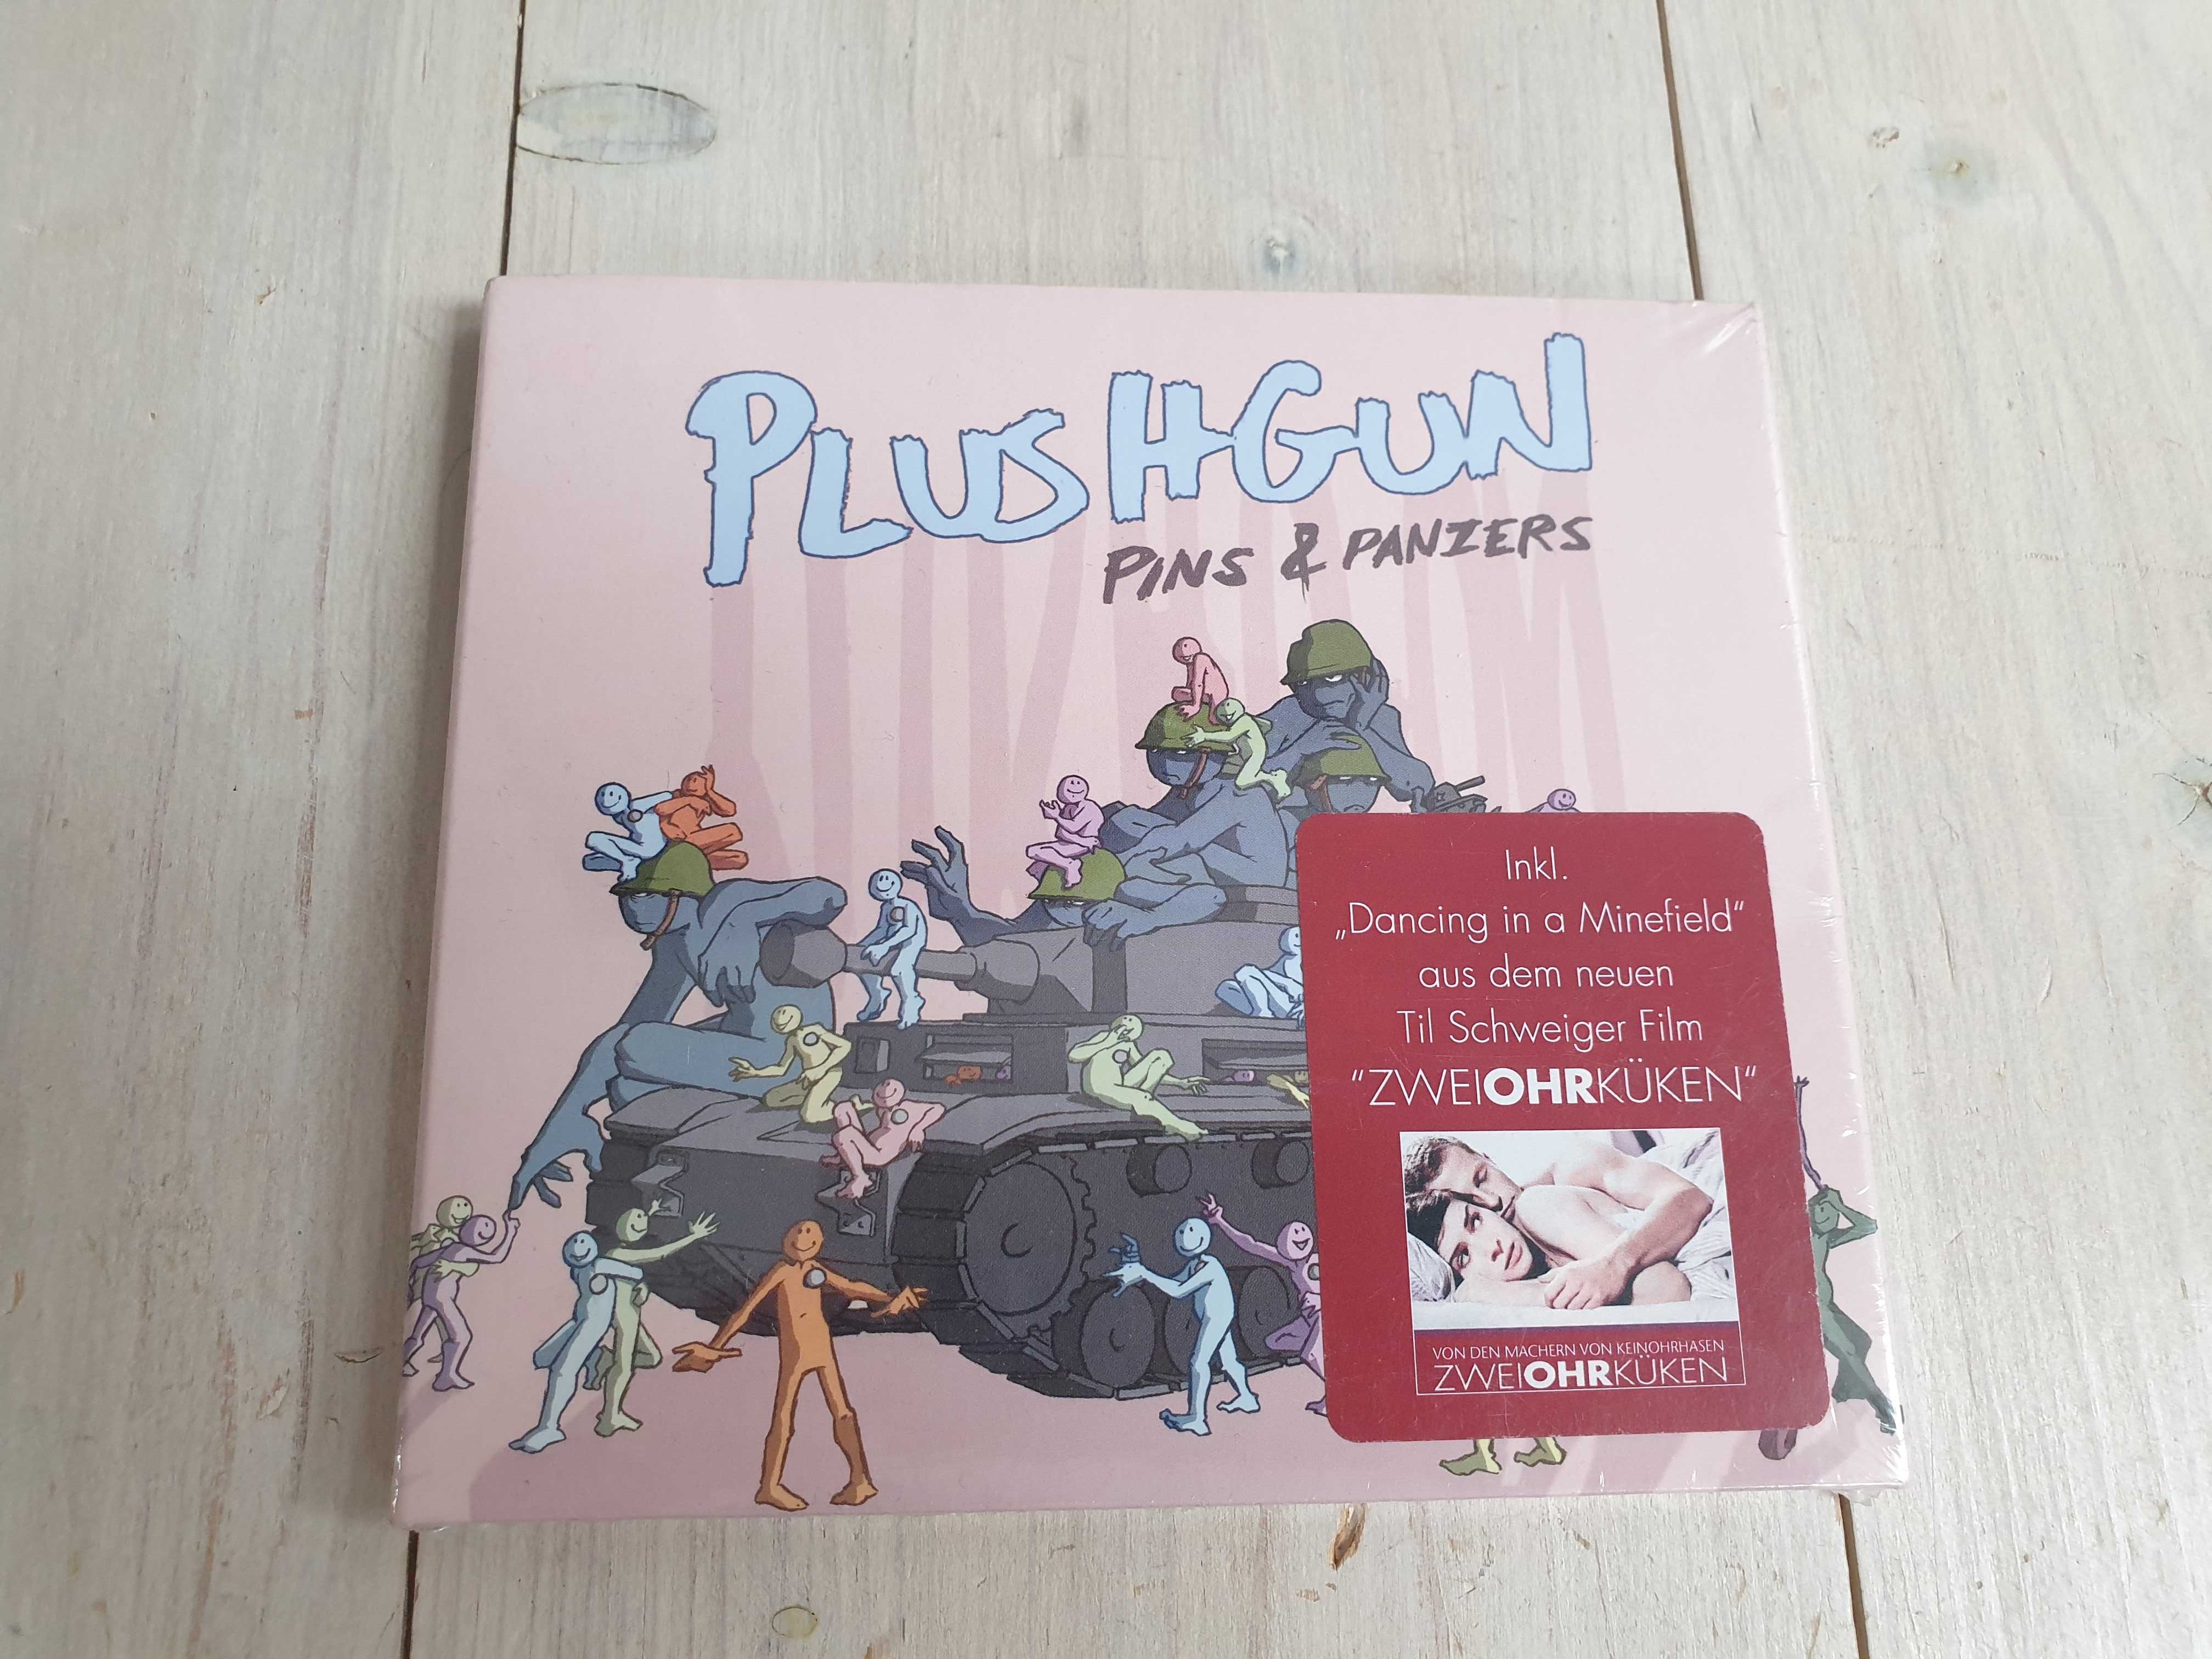 Nowa płyta CD Plushgun Pins & Panzers